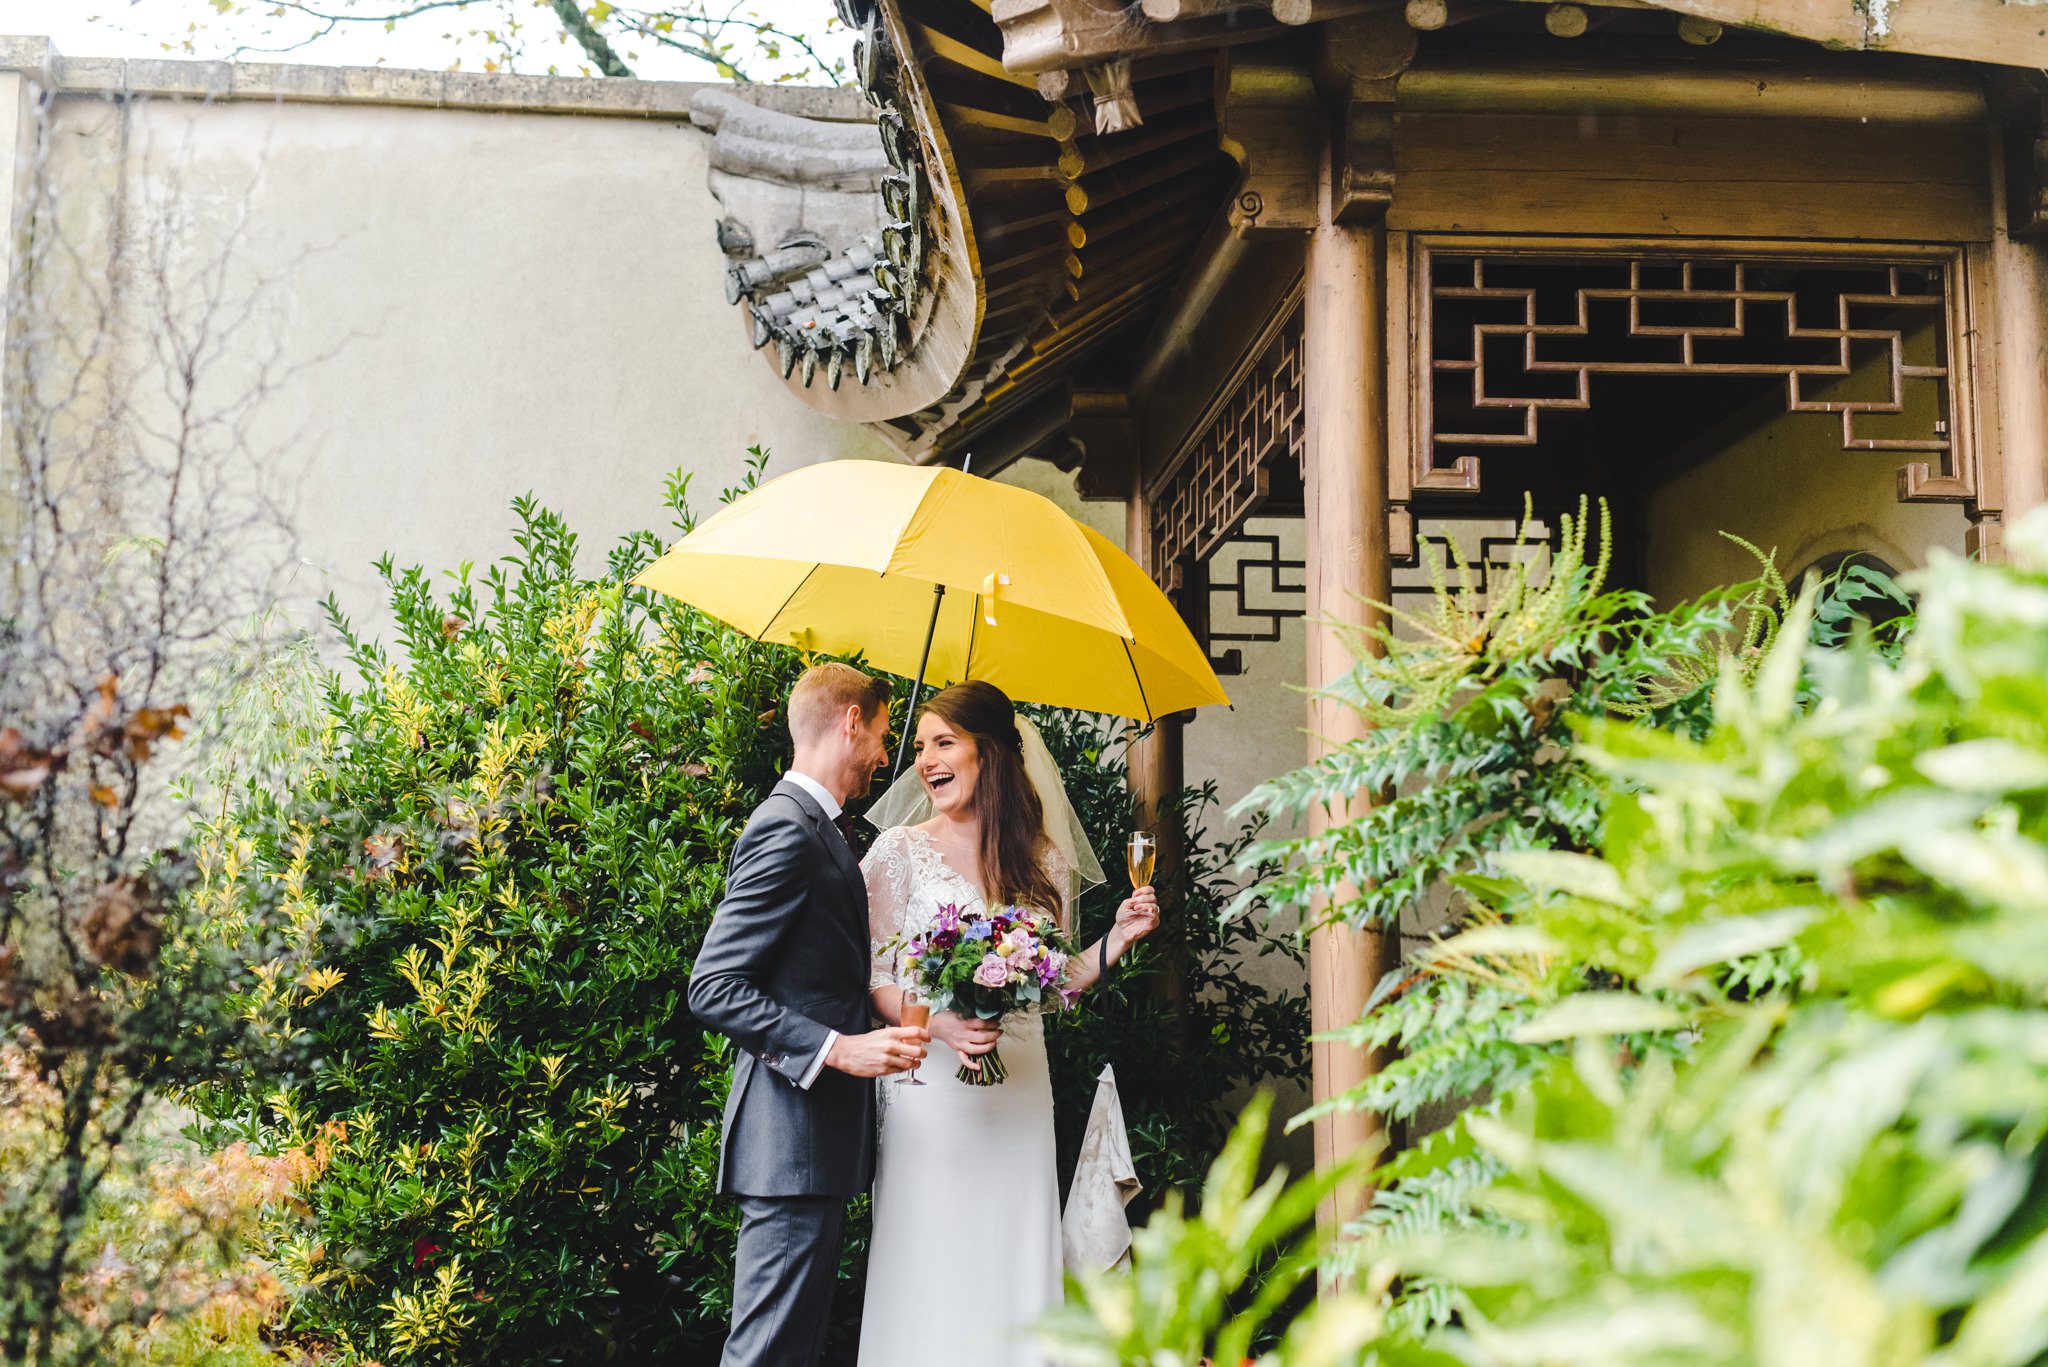 A bride and groom under a yellow umbrella